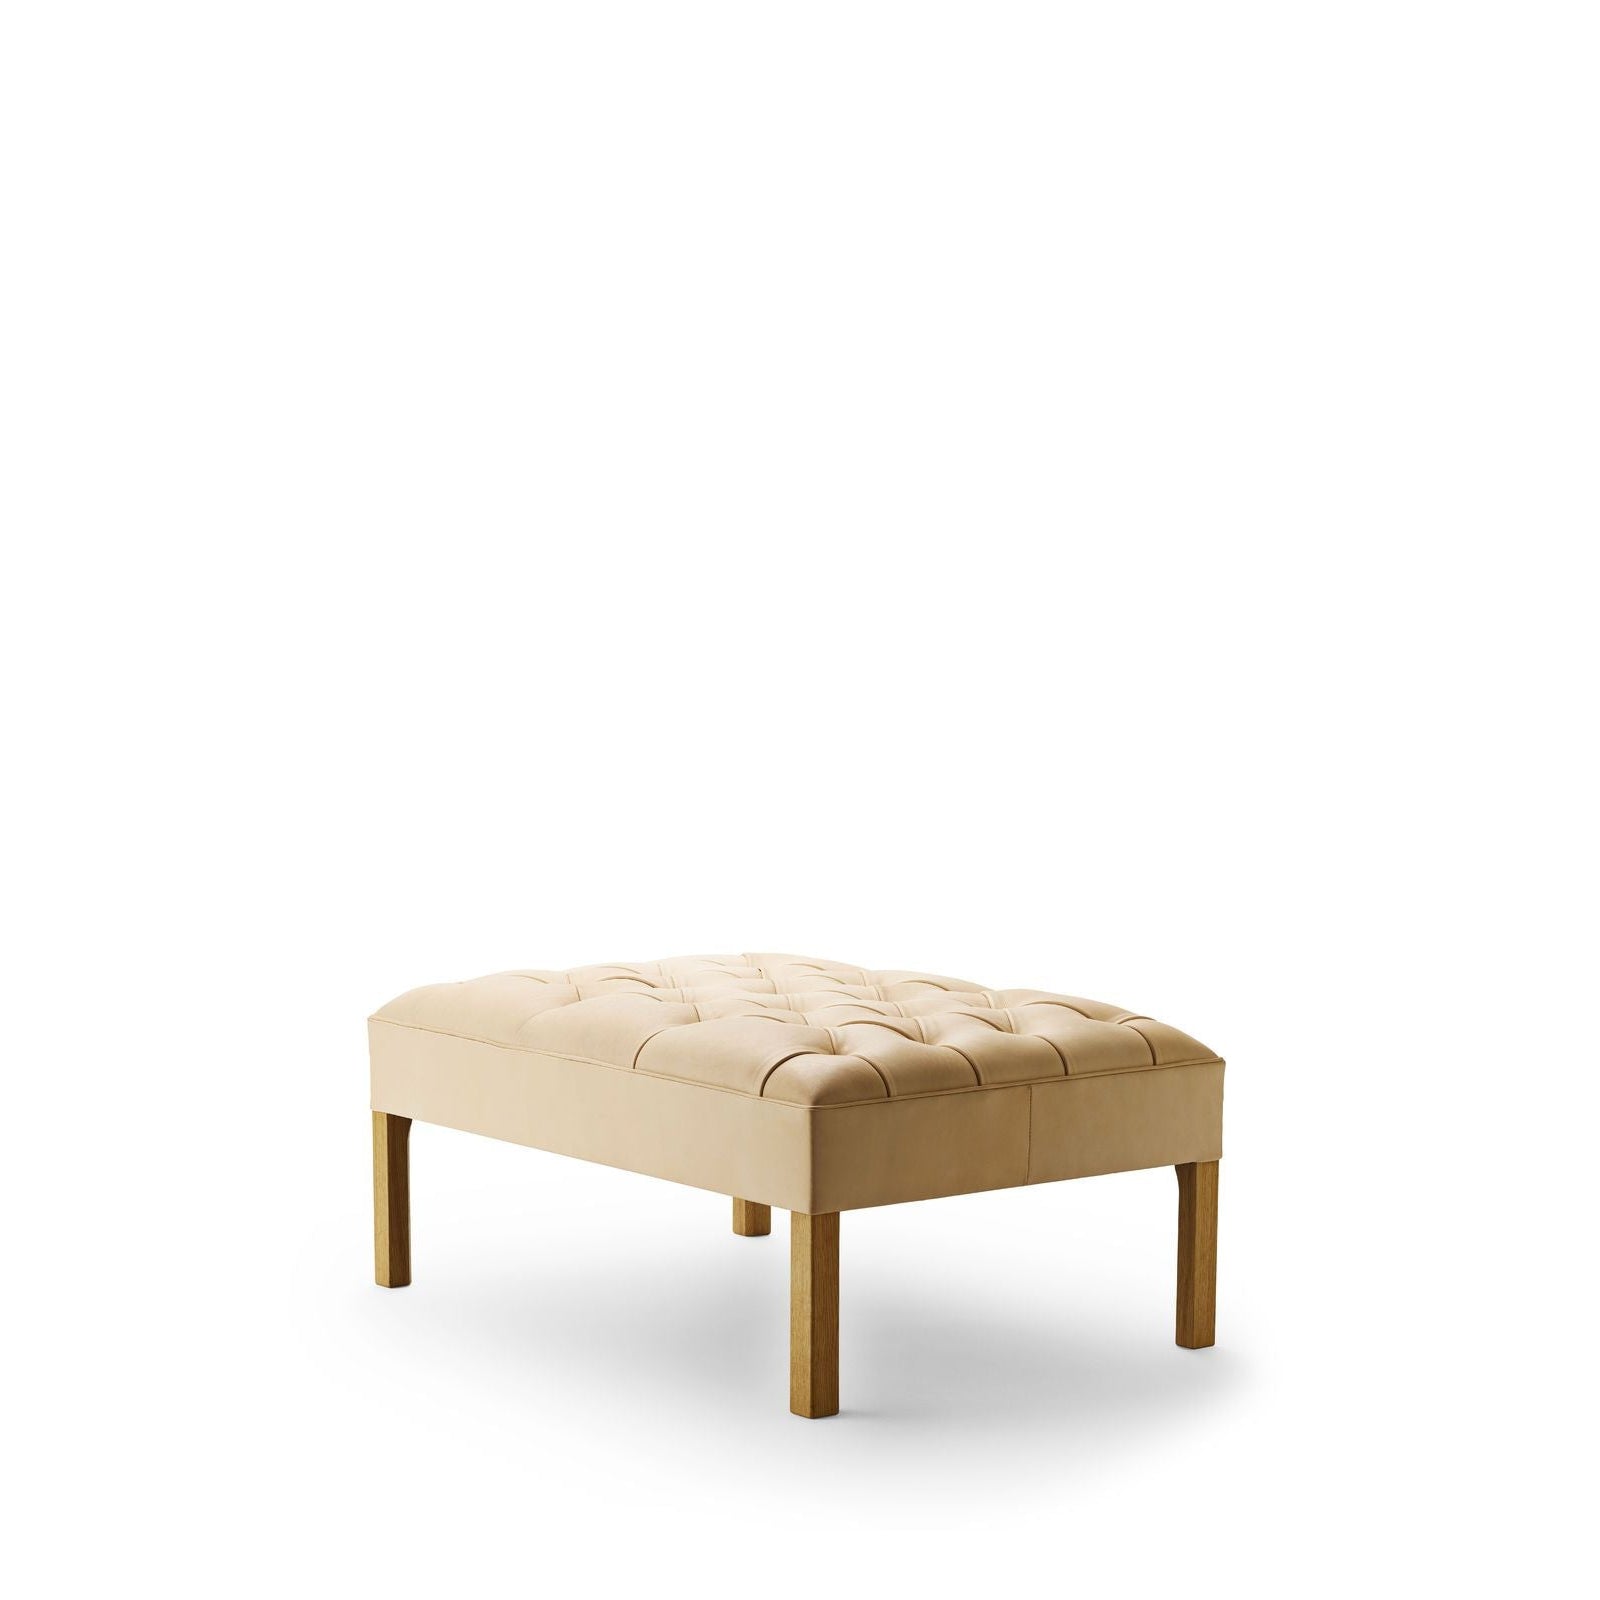 Carl Hansen Kk48651 Addition Sofa, Oiled Oak/Beige Leather